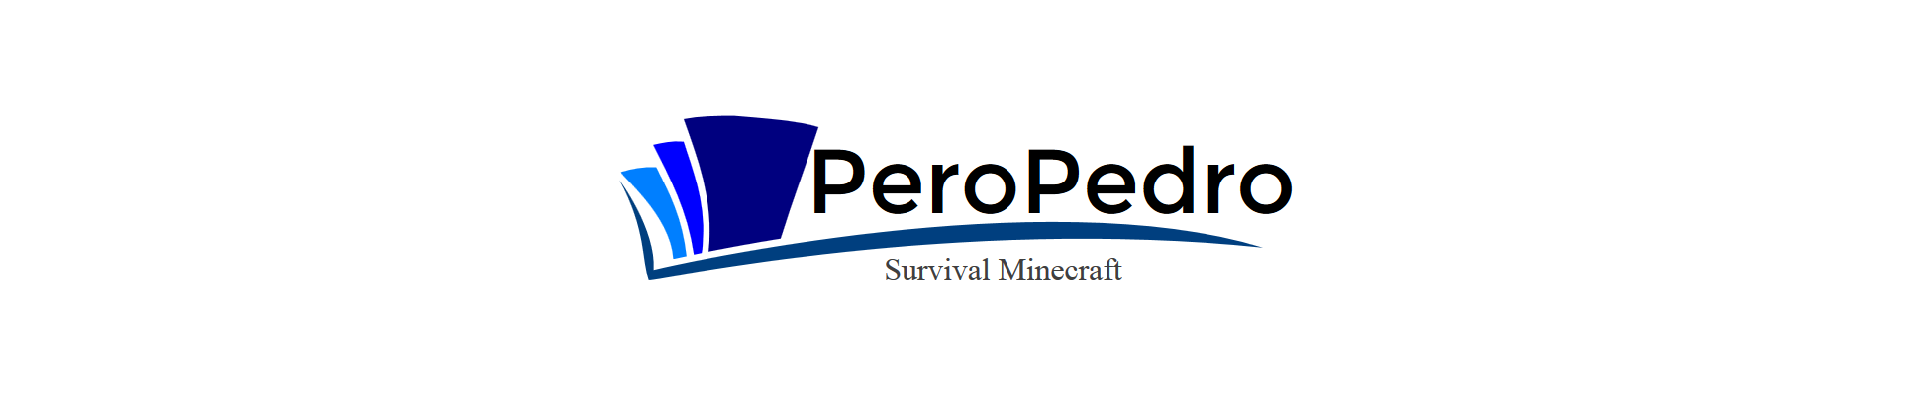 PeroPedro